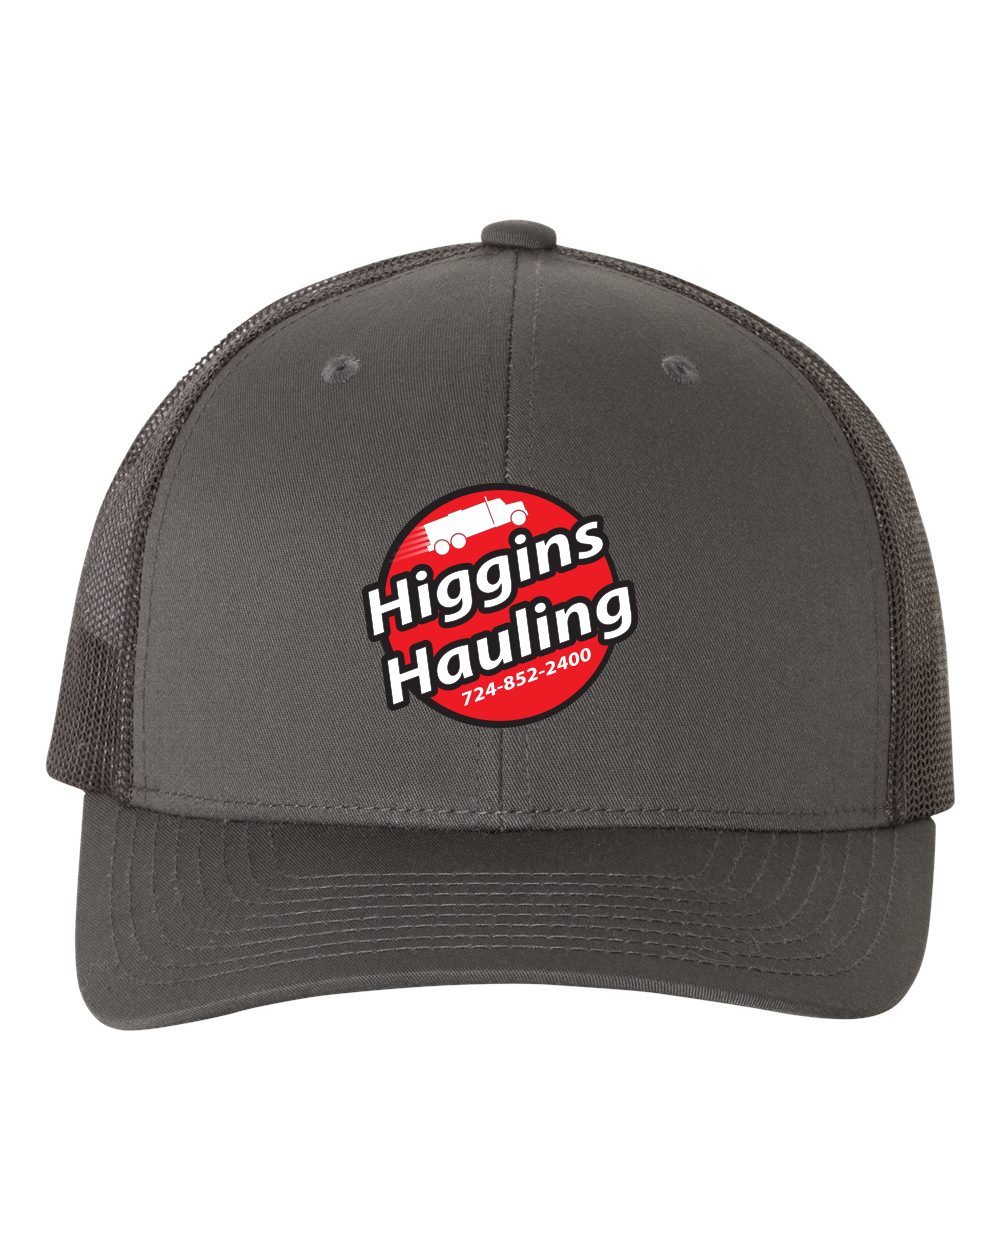 Higgins Hauling - Six-Panel Retro Trucker Cap